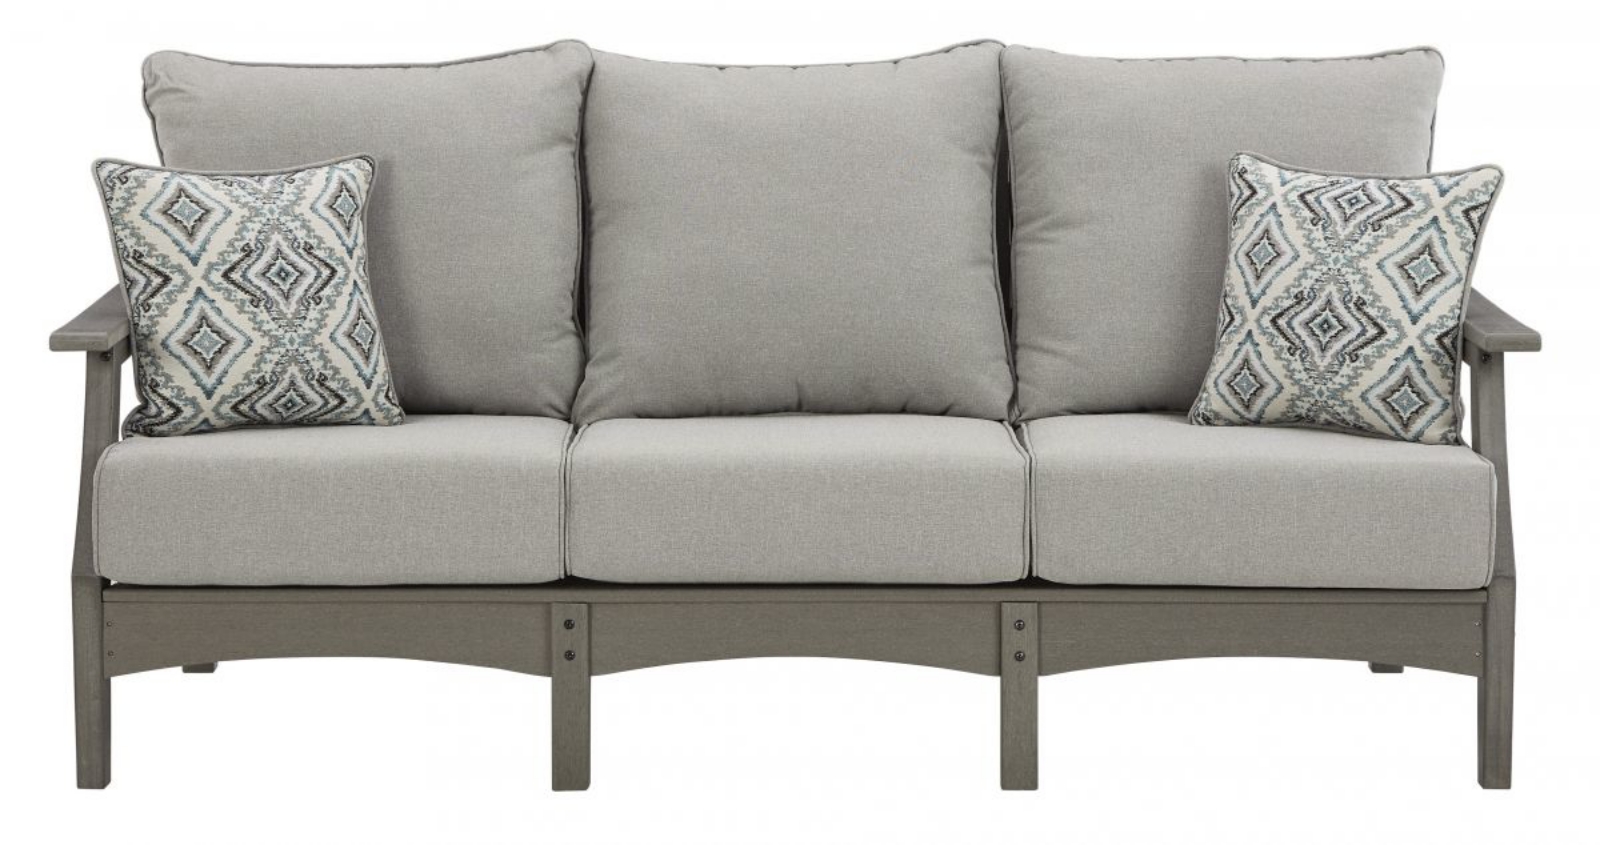 Picture of Visola Outdoor Sofa